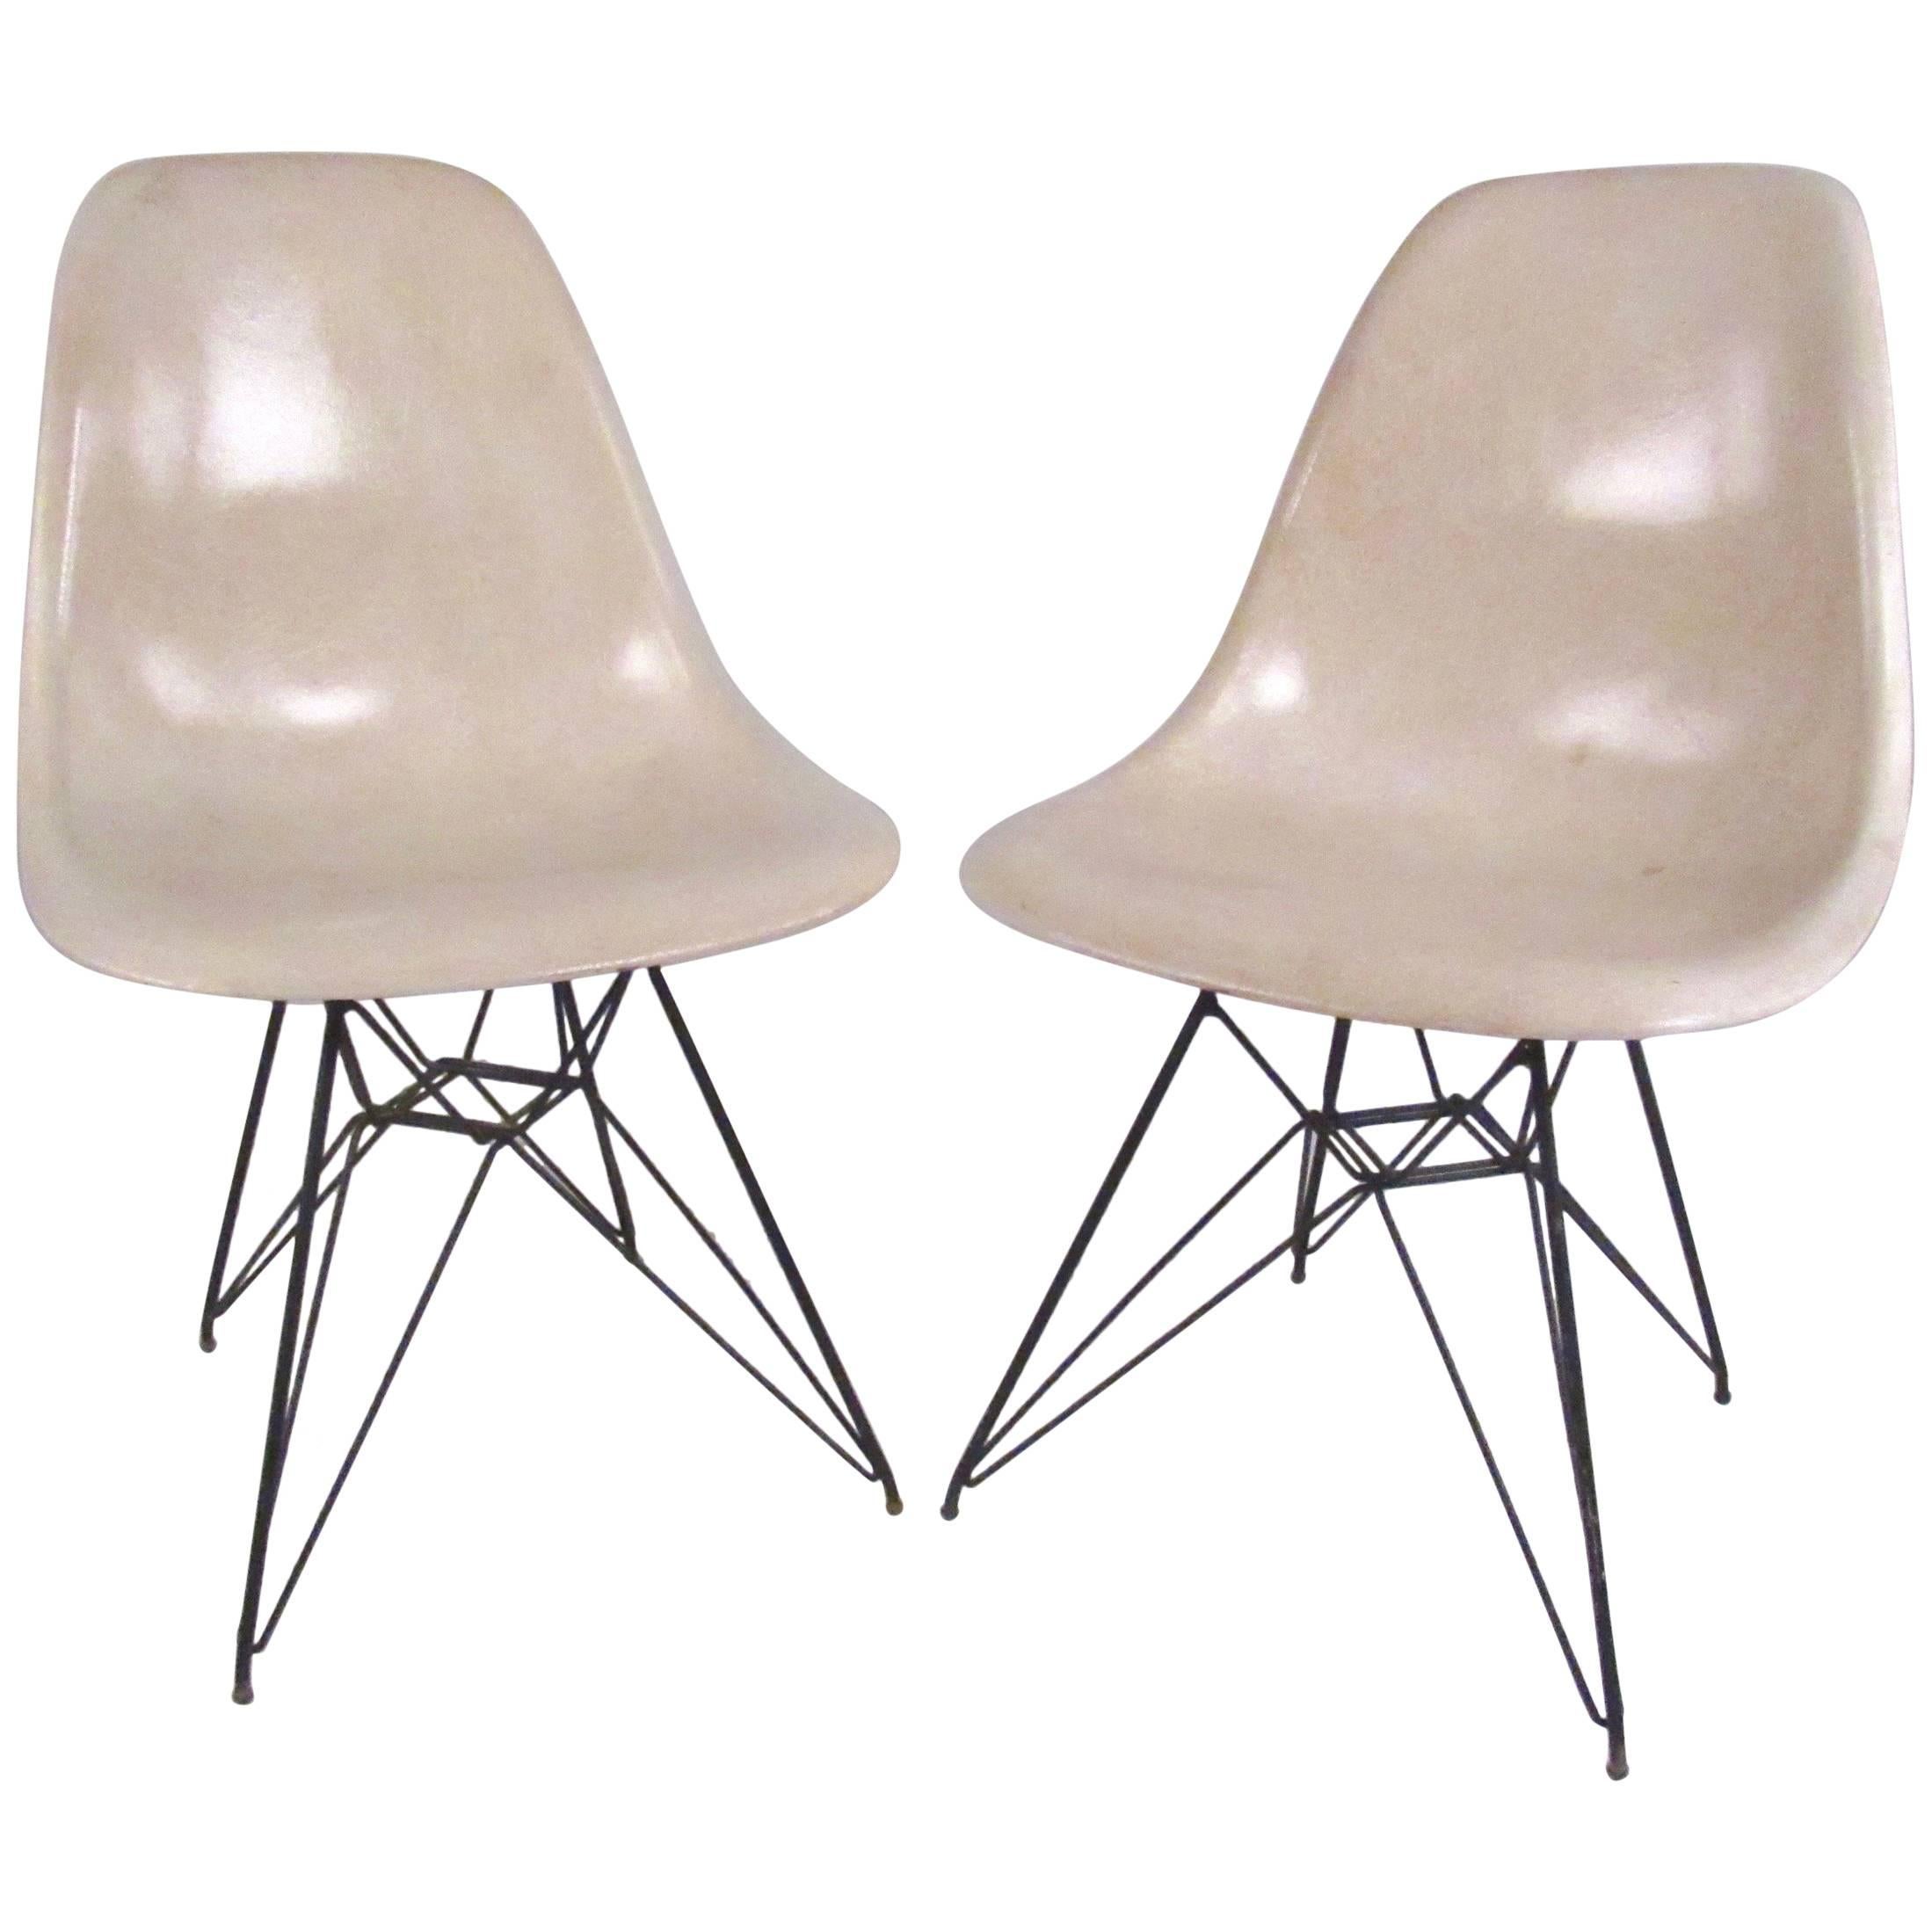 Vintage Vitra Hermann Miller Eames side chair Stuhl Gestell Metall mid century 